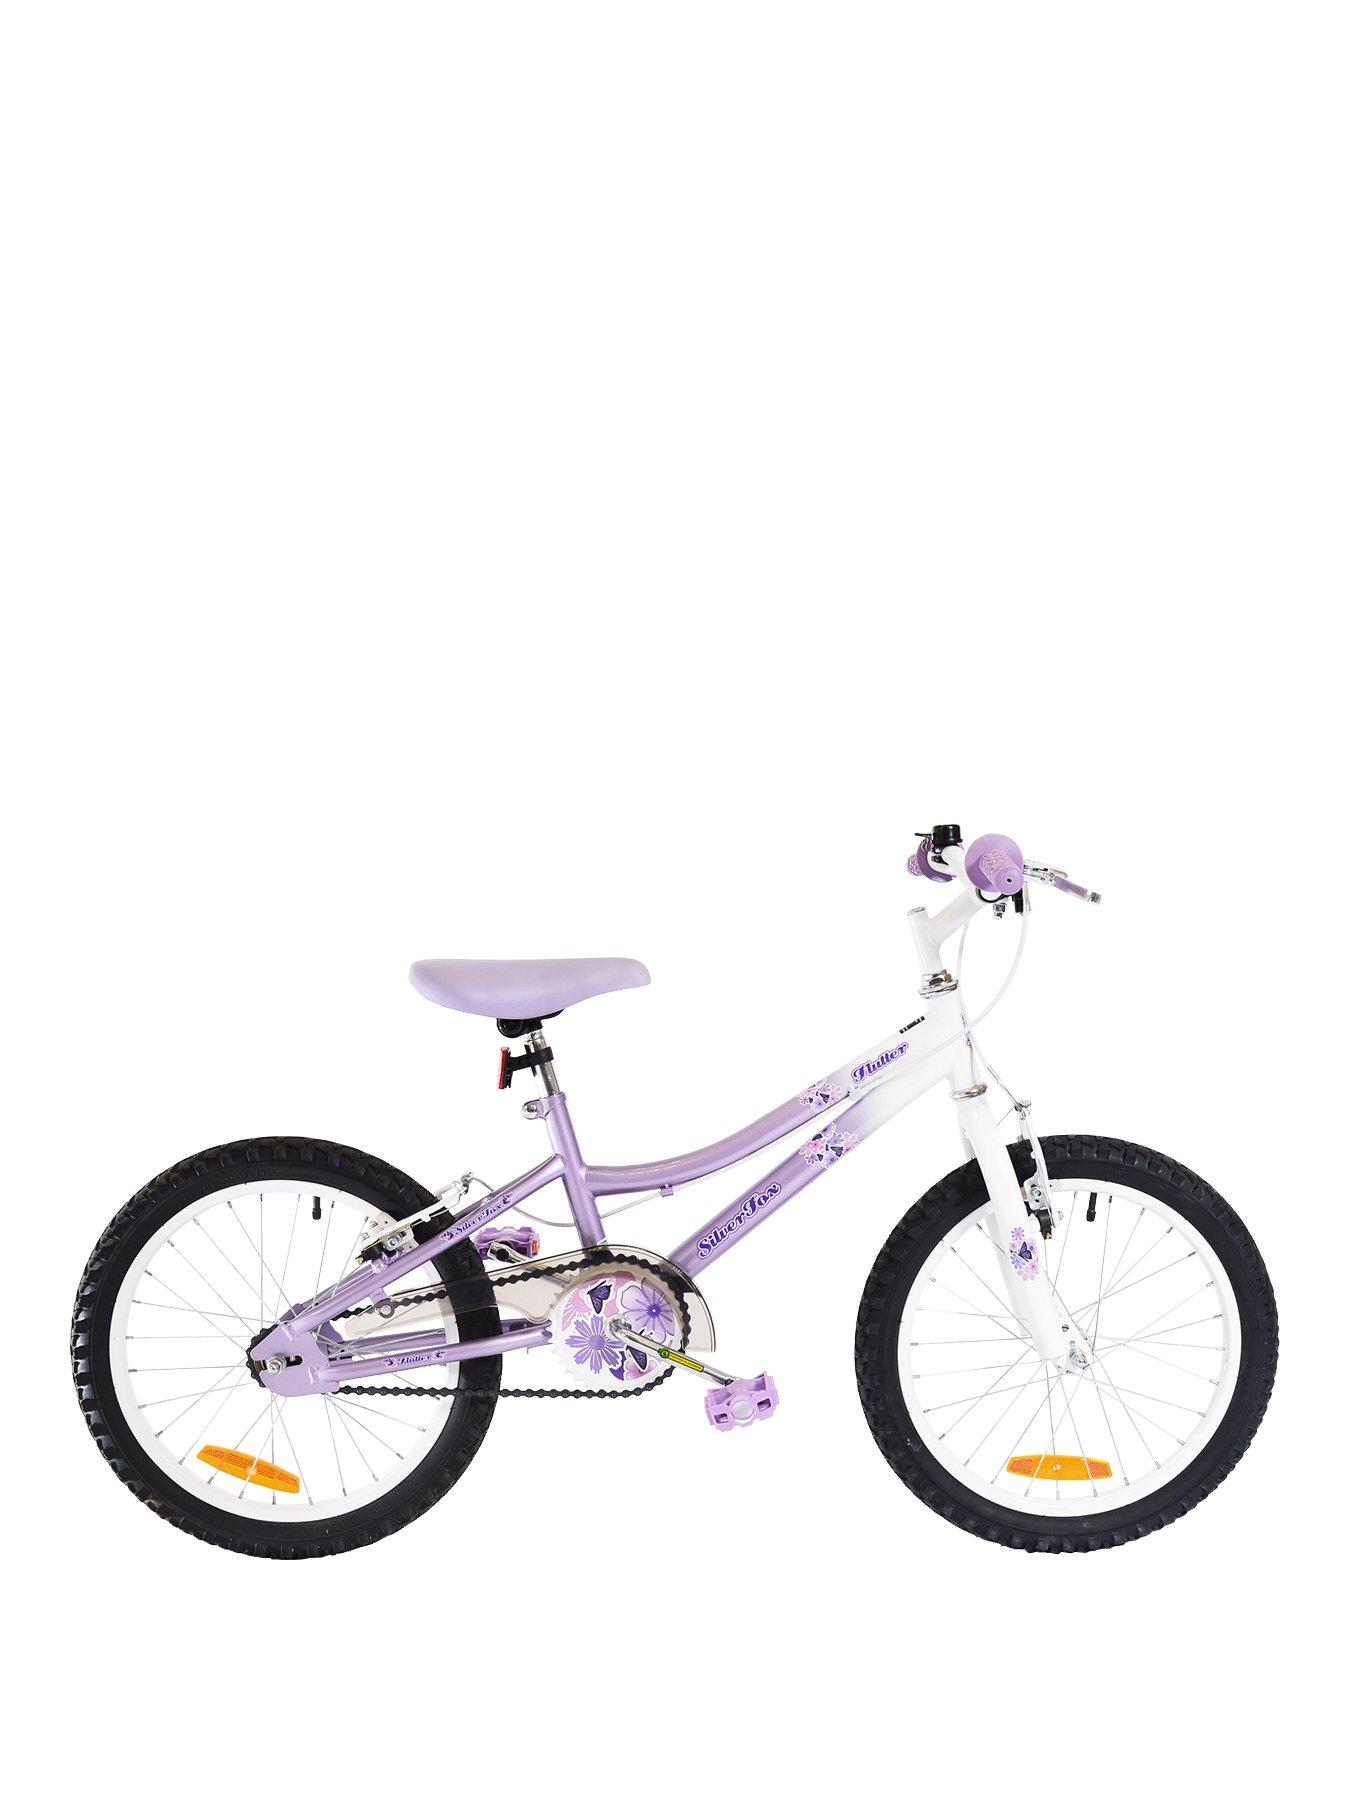 Muddyfox X Silverfox Girl Princess Spoked Wheels Bike with Slick Tread Tyres Pink//White Size 12-Inch